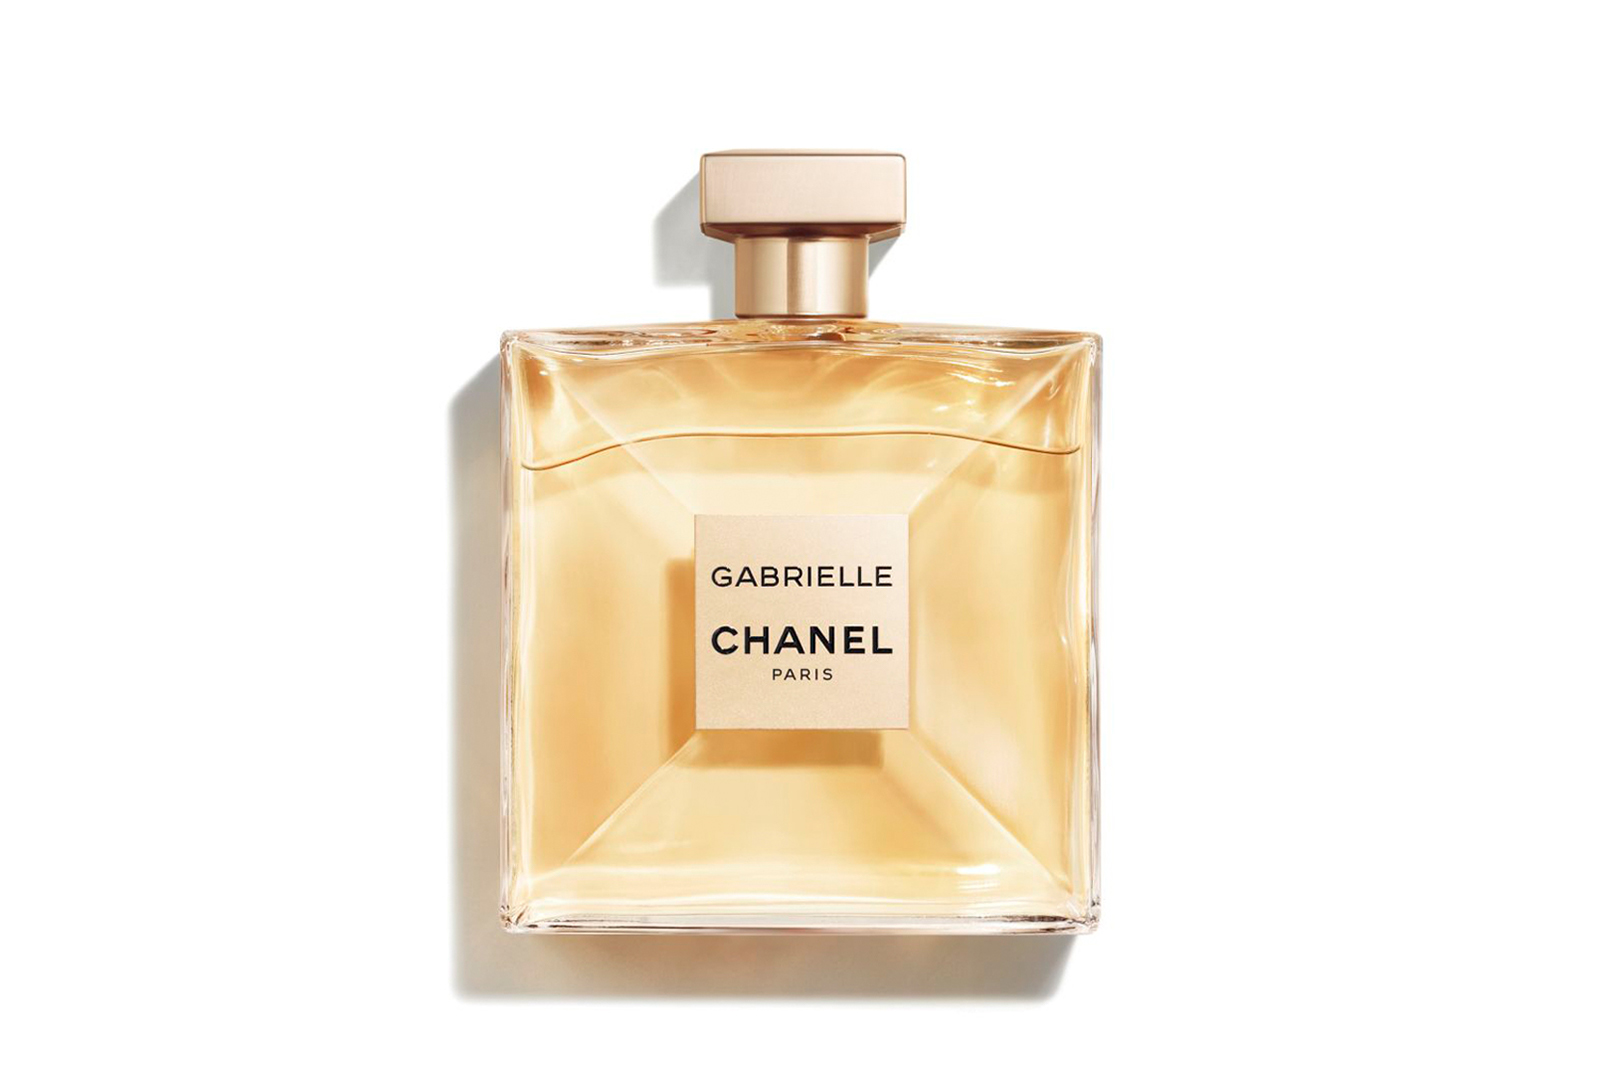 Chanel GabrielleШанель Габриэль 100 мл Парфюм для женщин и мужчин  136686843 купить за 639  в интернетмагазине Wildberries